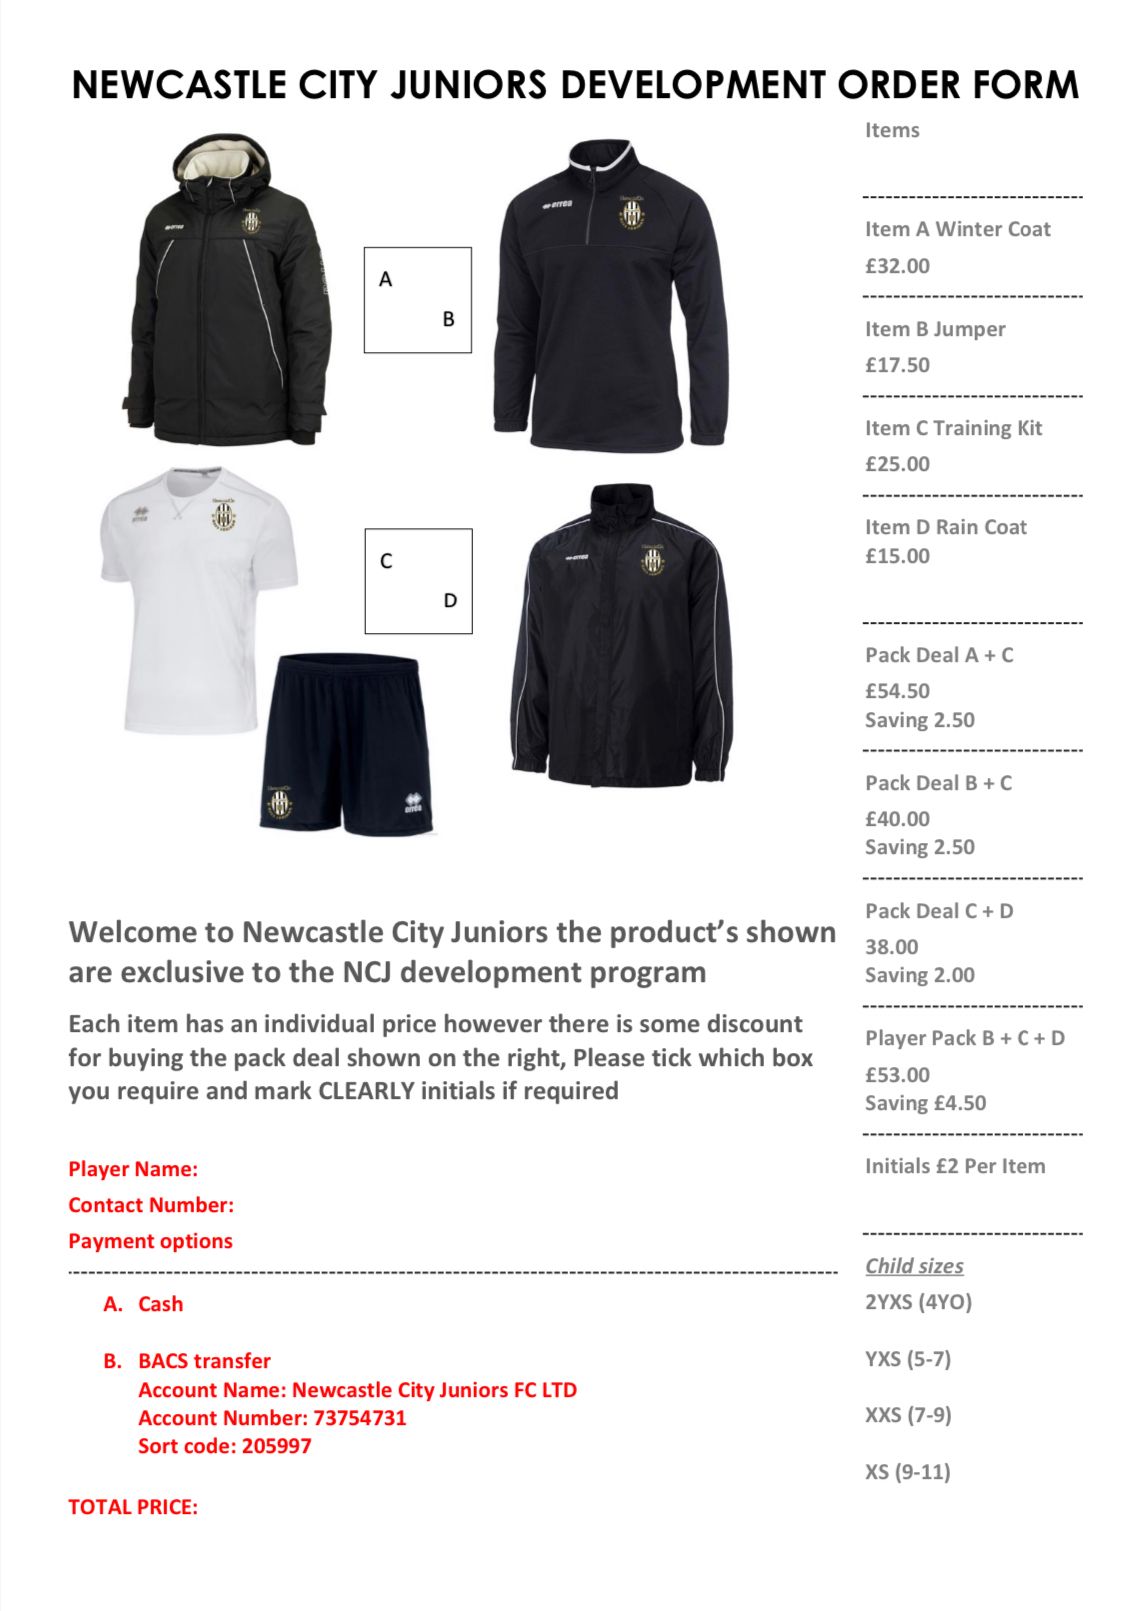 Order form for Newcastle City Juniors Football Development sportswear